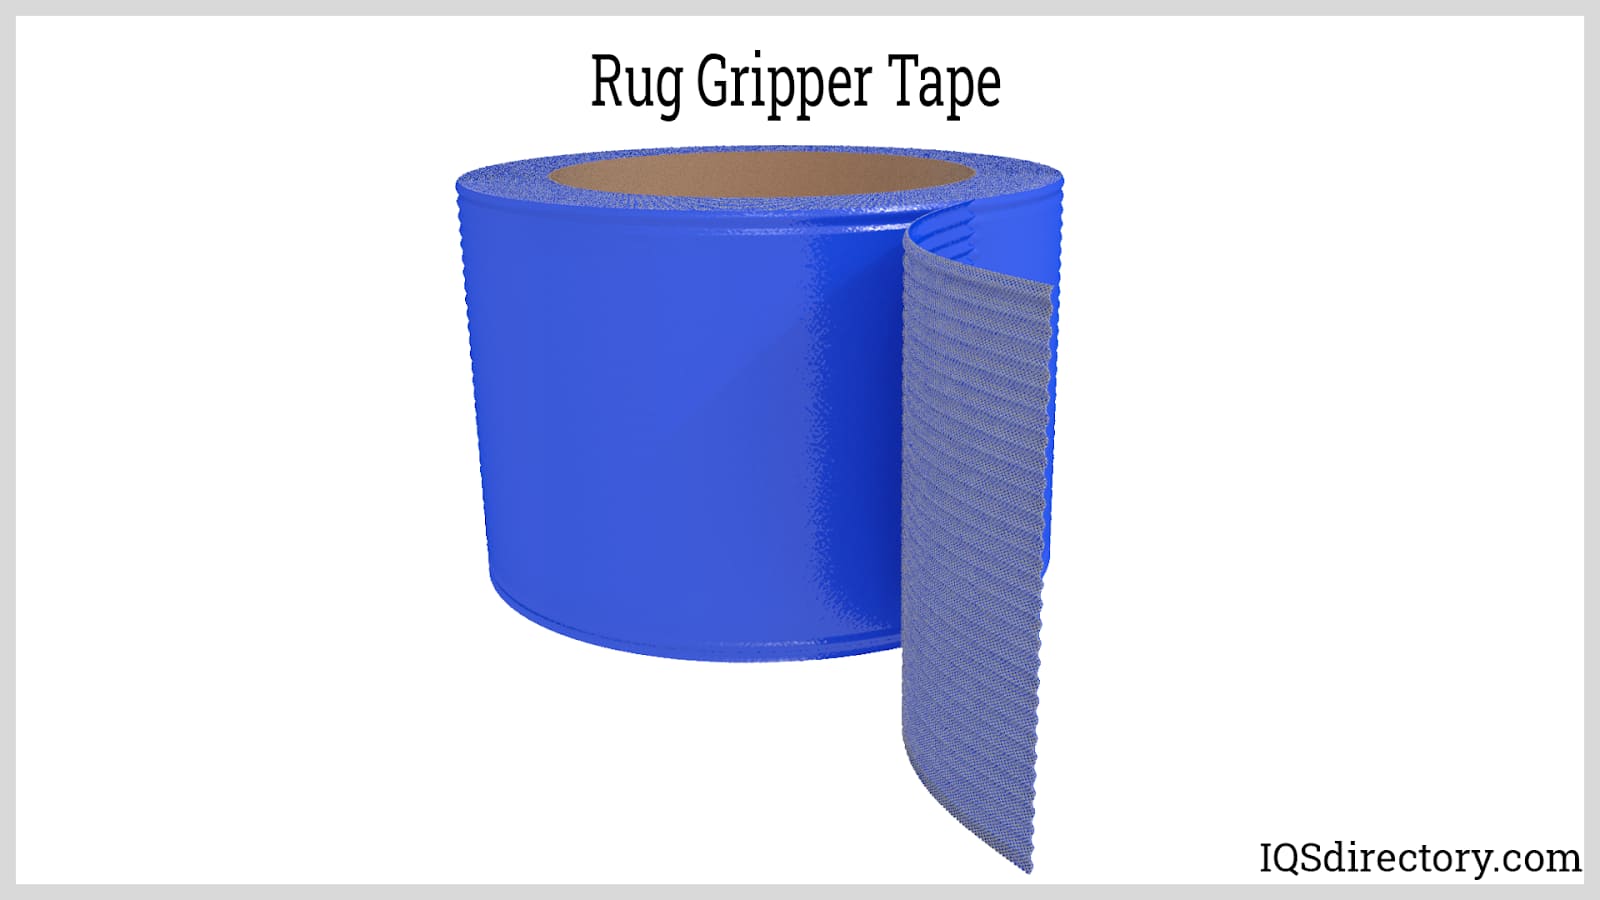 https://www.iqsdirectory.com/articles/tape-suppliers/carpet-tape/rug-gripper-tape.jpg